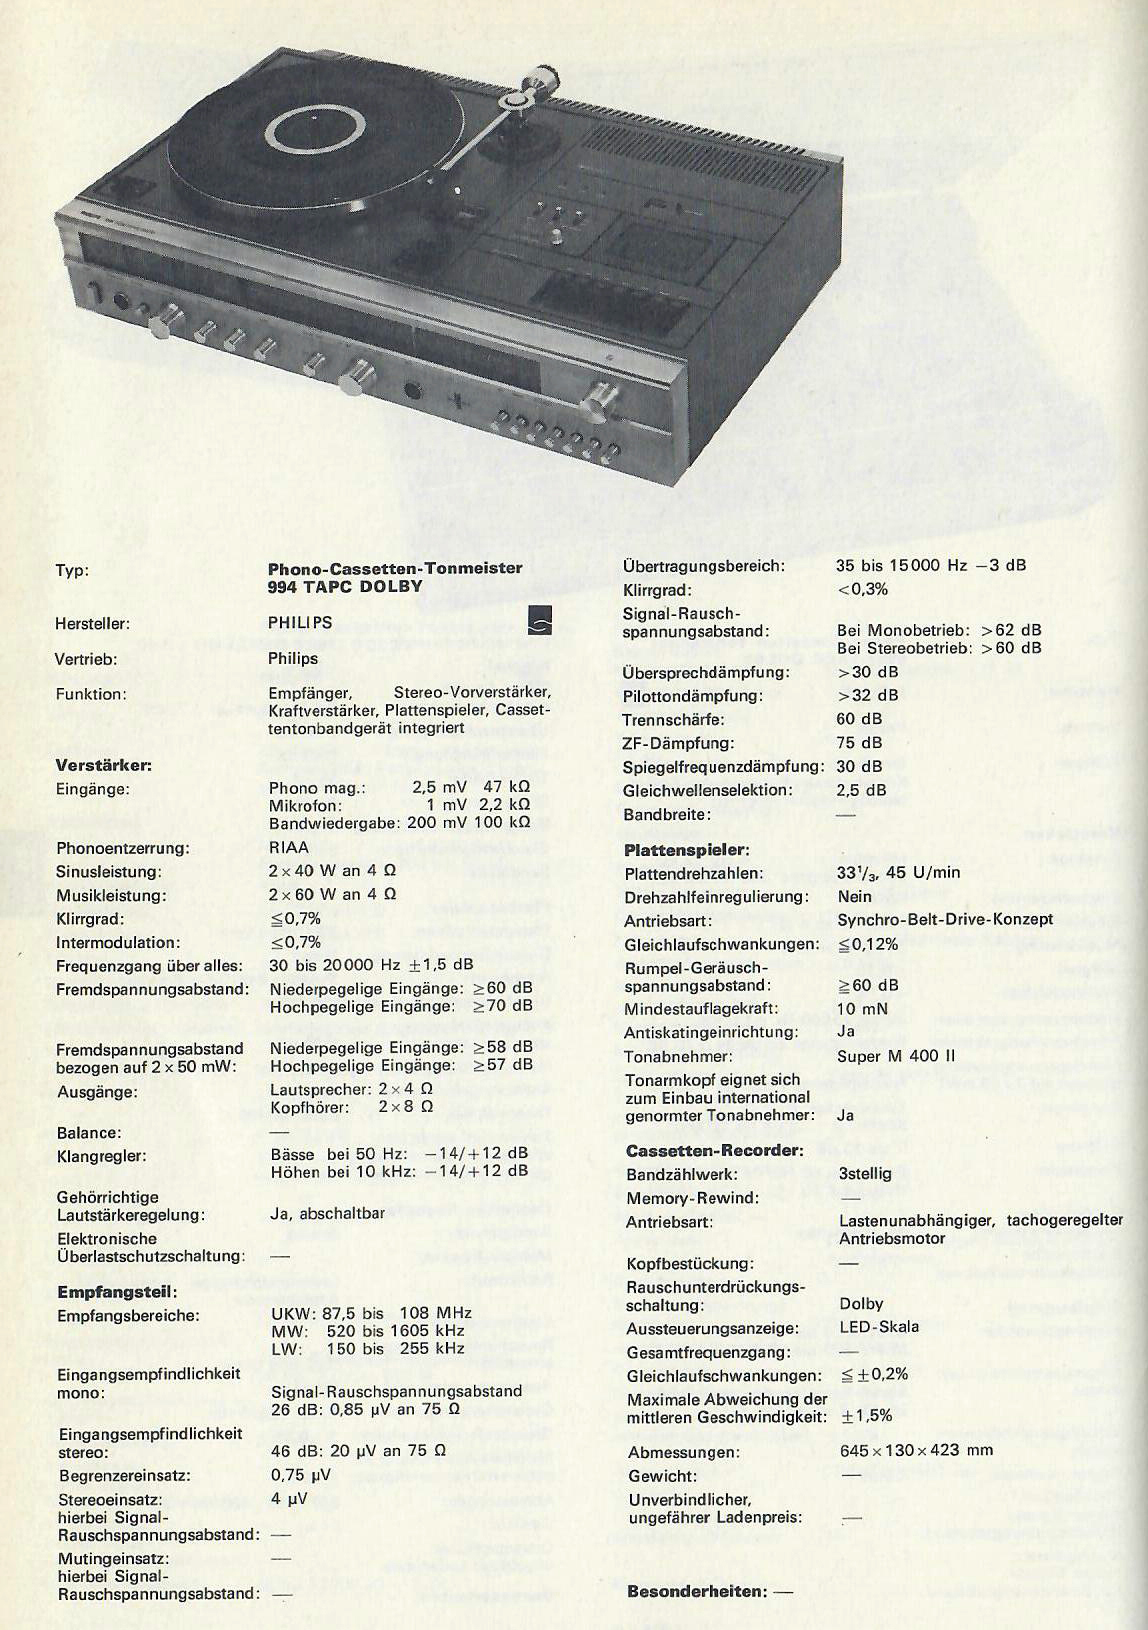 Philips Tonmeister 994-Daten.jpg